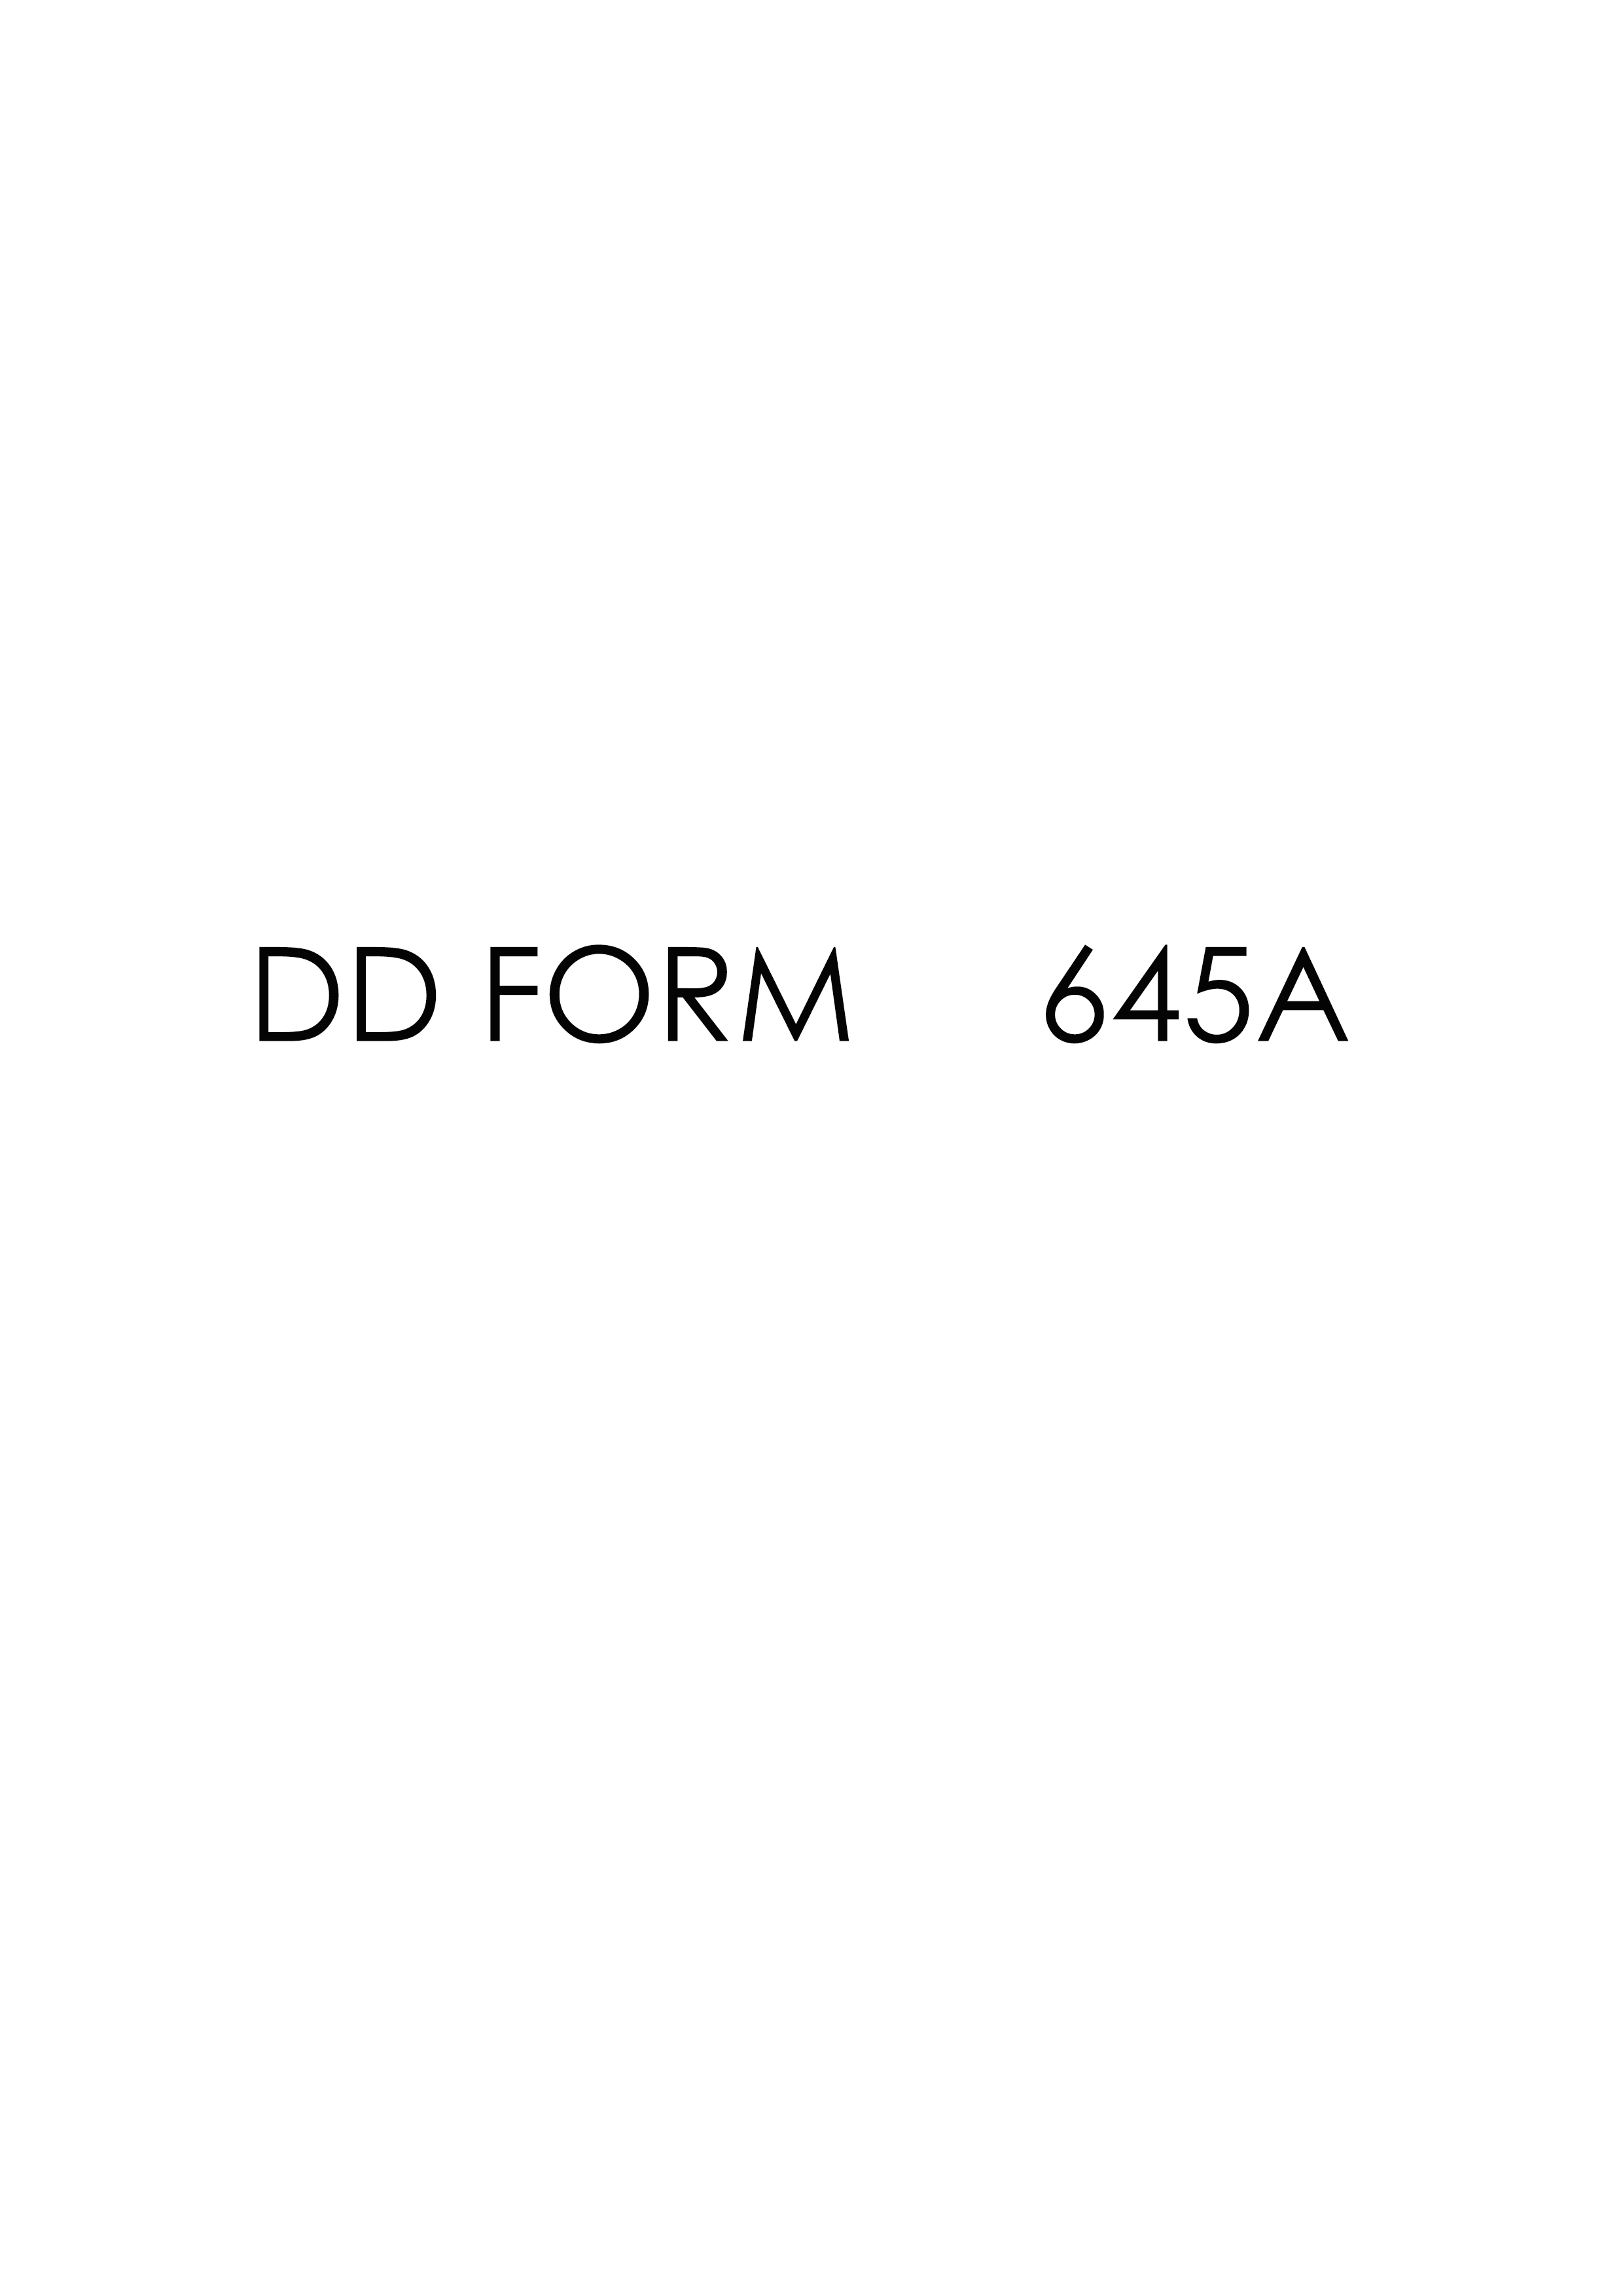 Download dd 645A Form